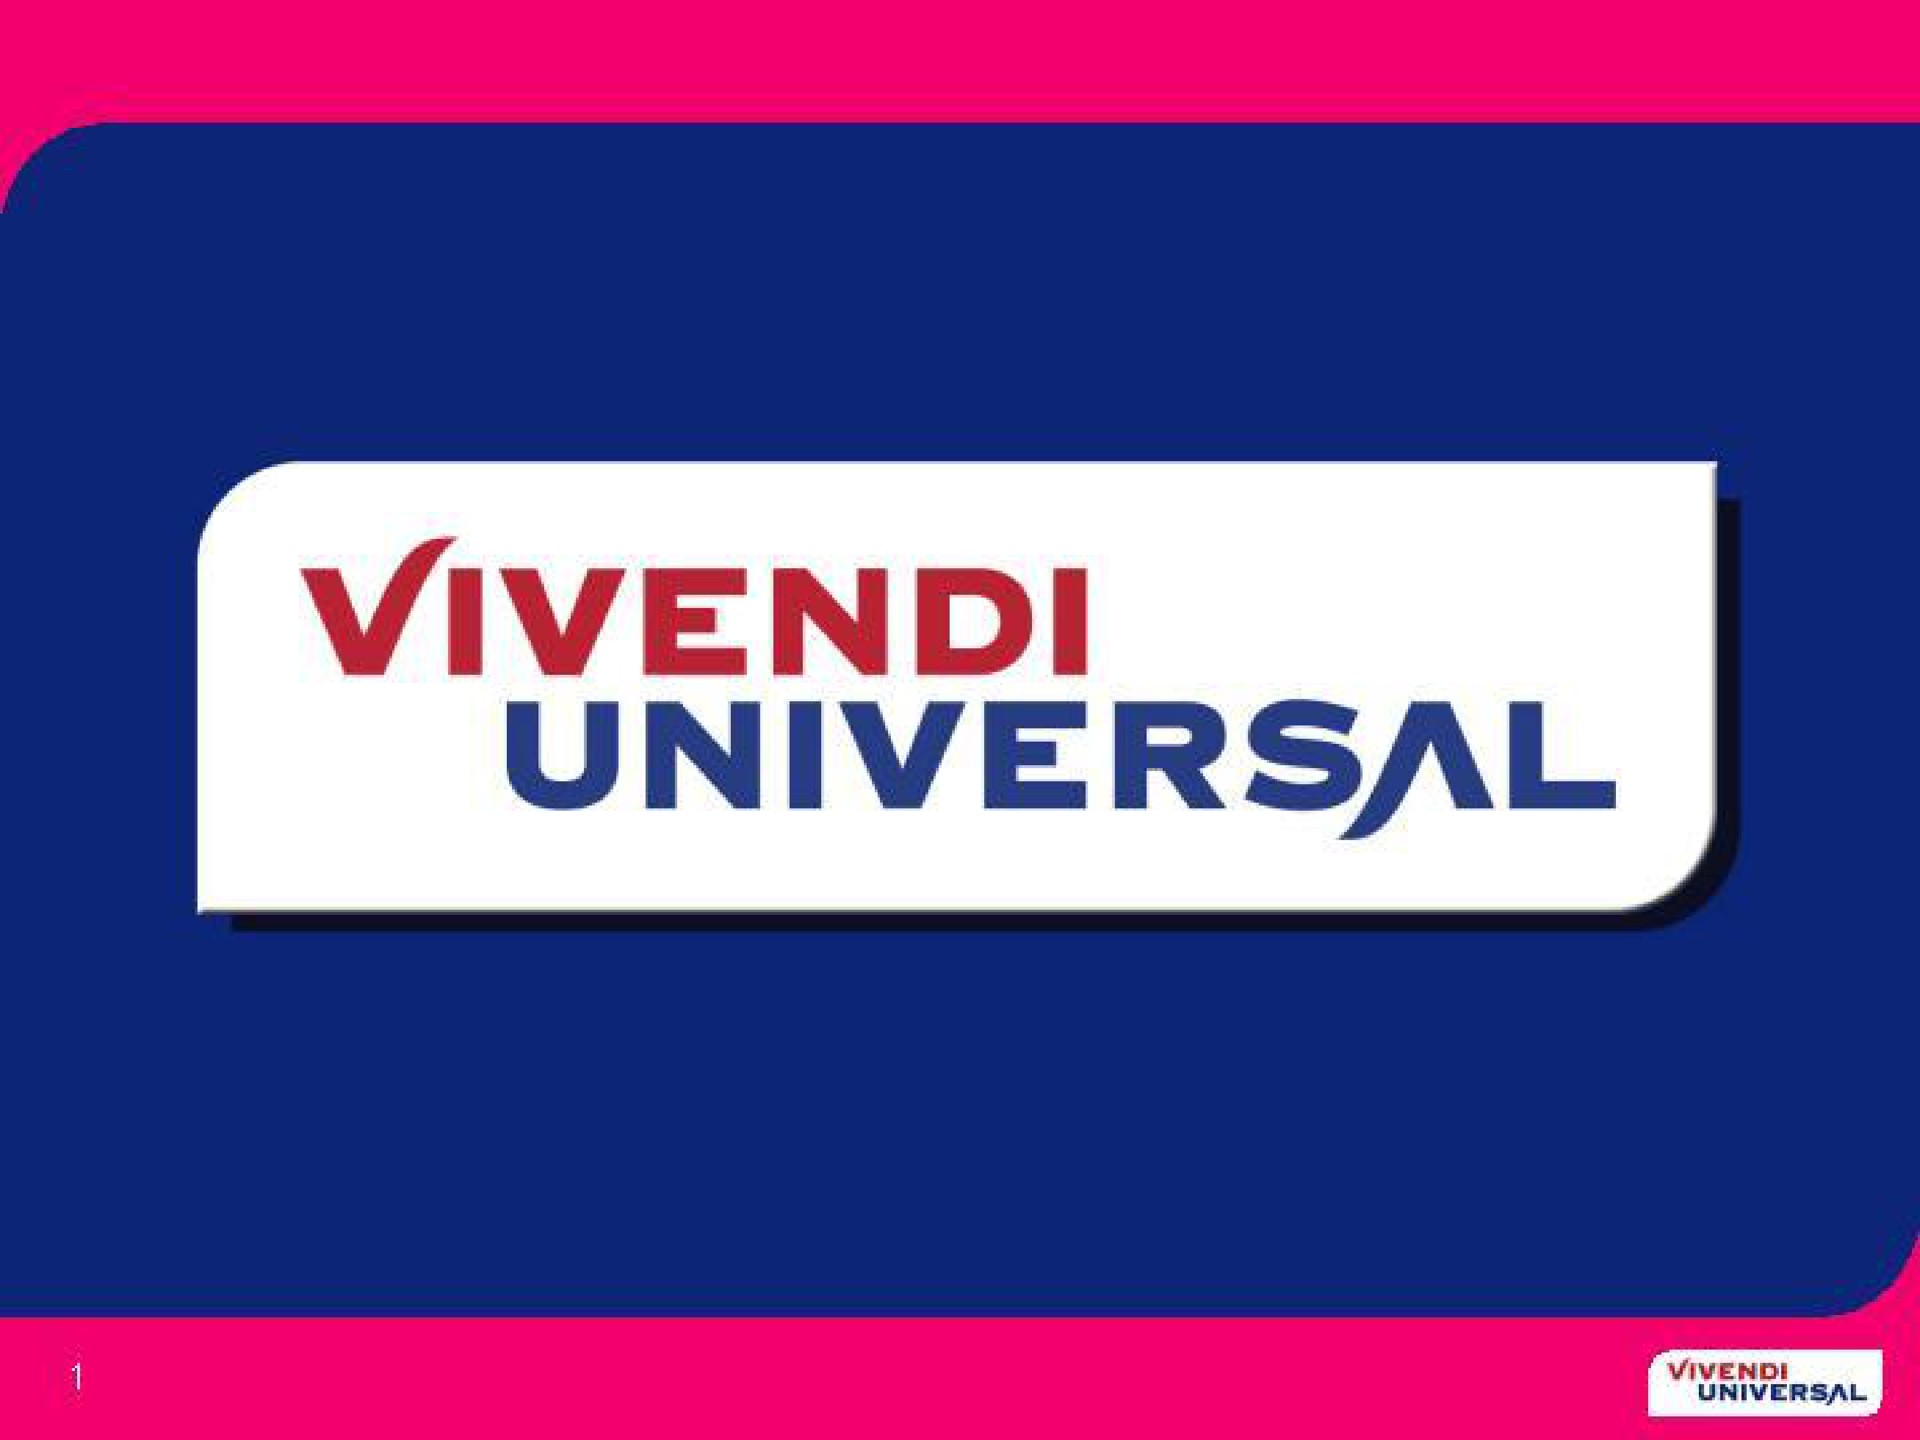 universal | Vivendi